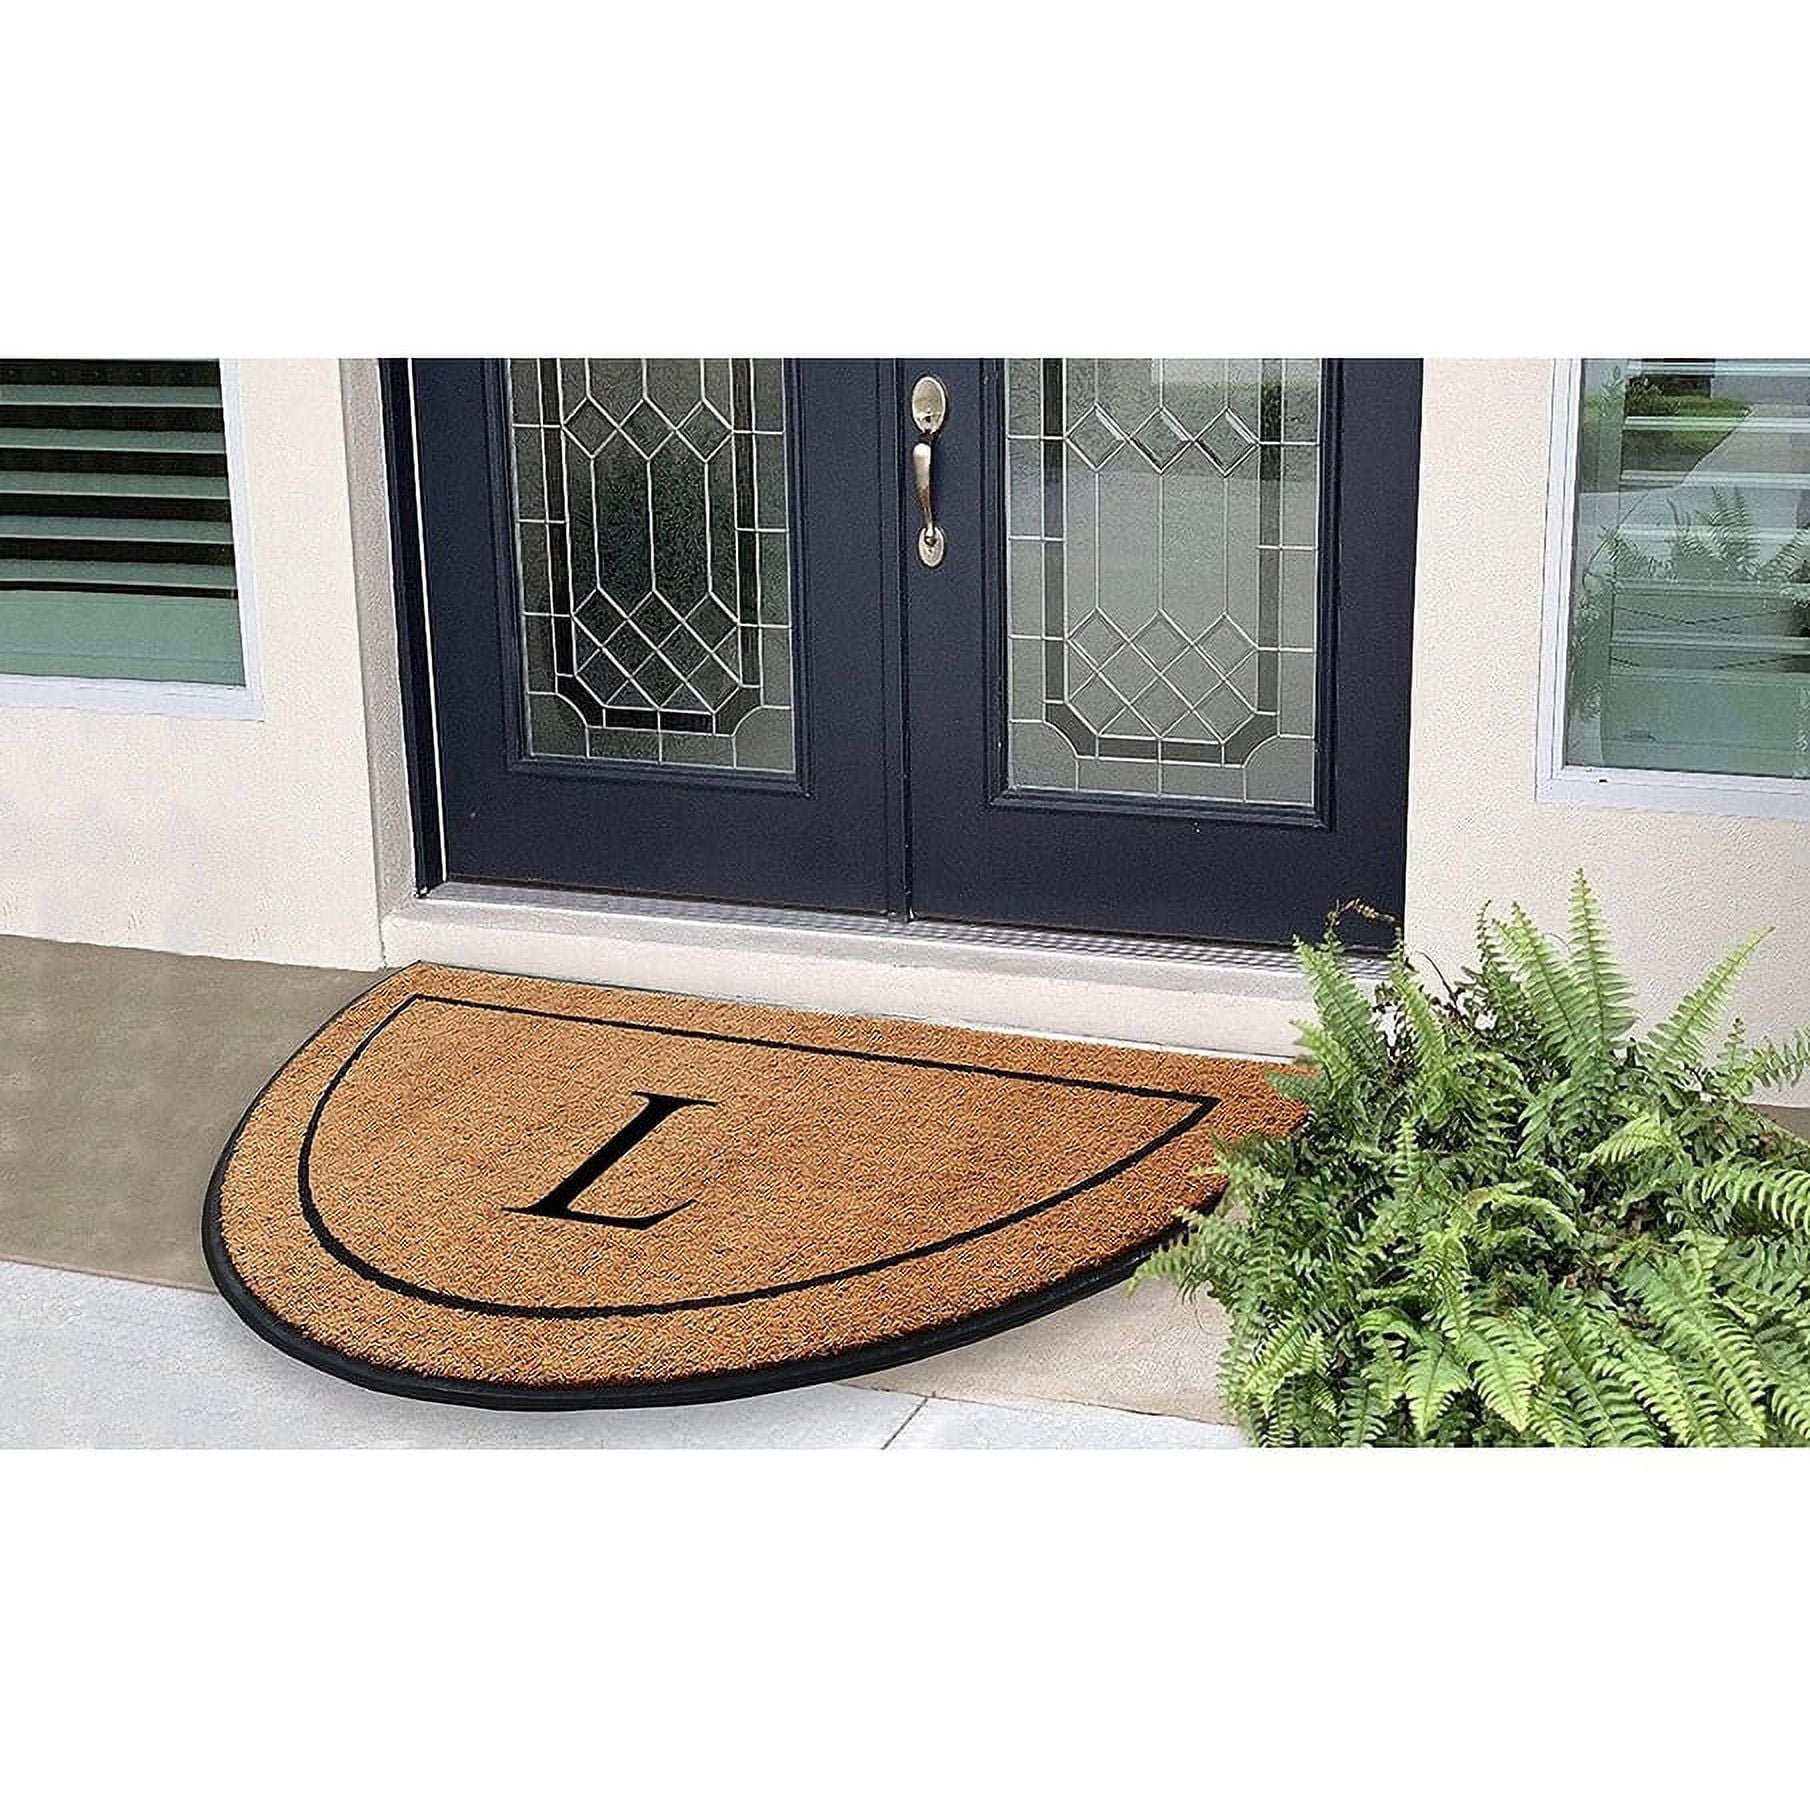 Bernadetta A1hc Rubber & Coir Monogrammed Door Mat for Front Door, 24x39, Anti-Shed Treated Durable Doormat for Outdoor Entrance, Heavy Duty, Low Prof